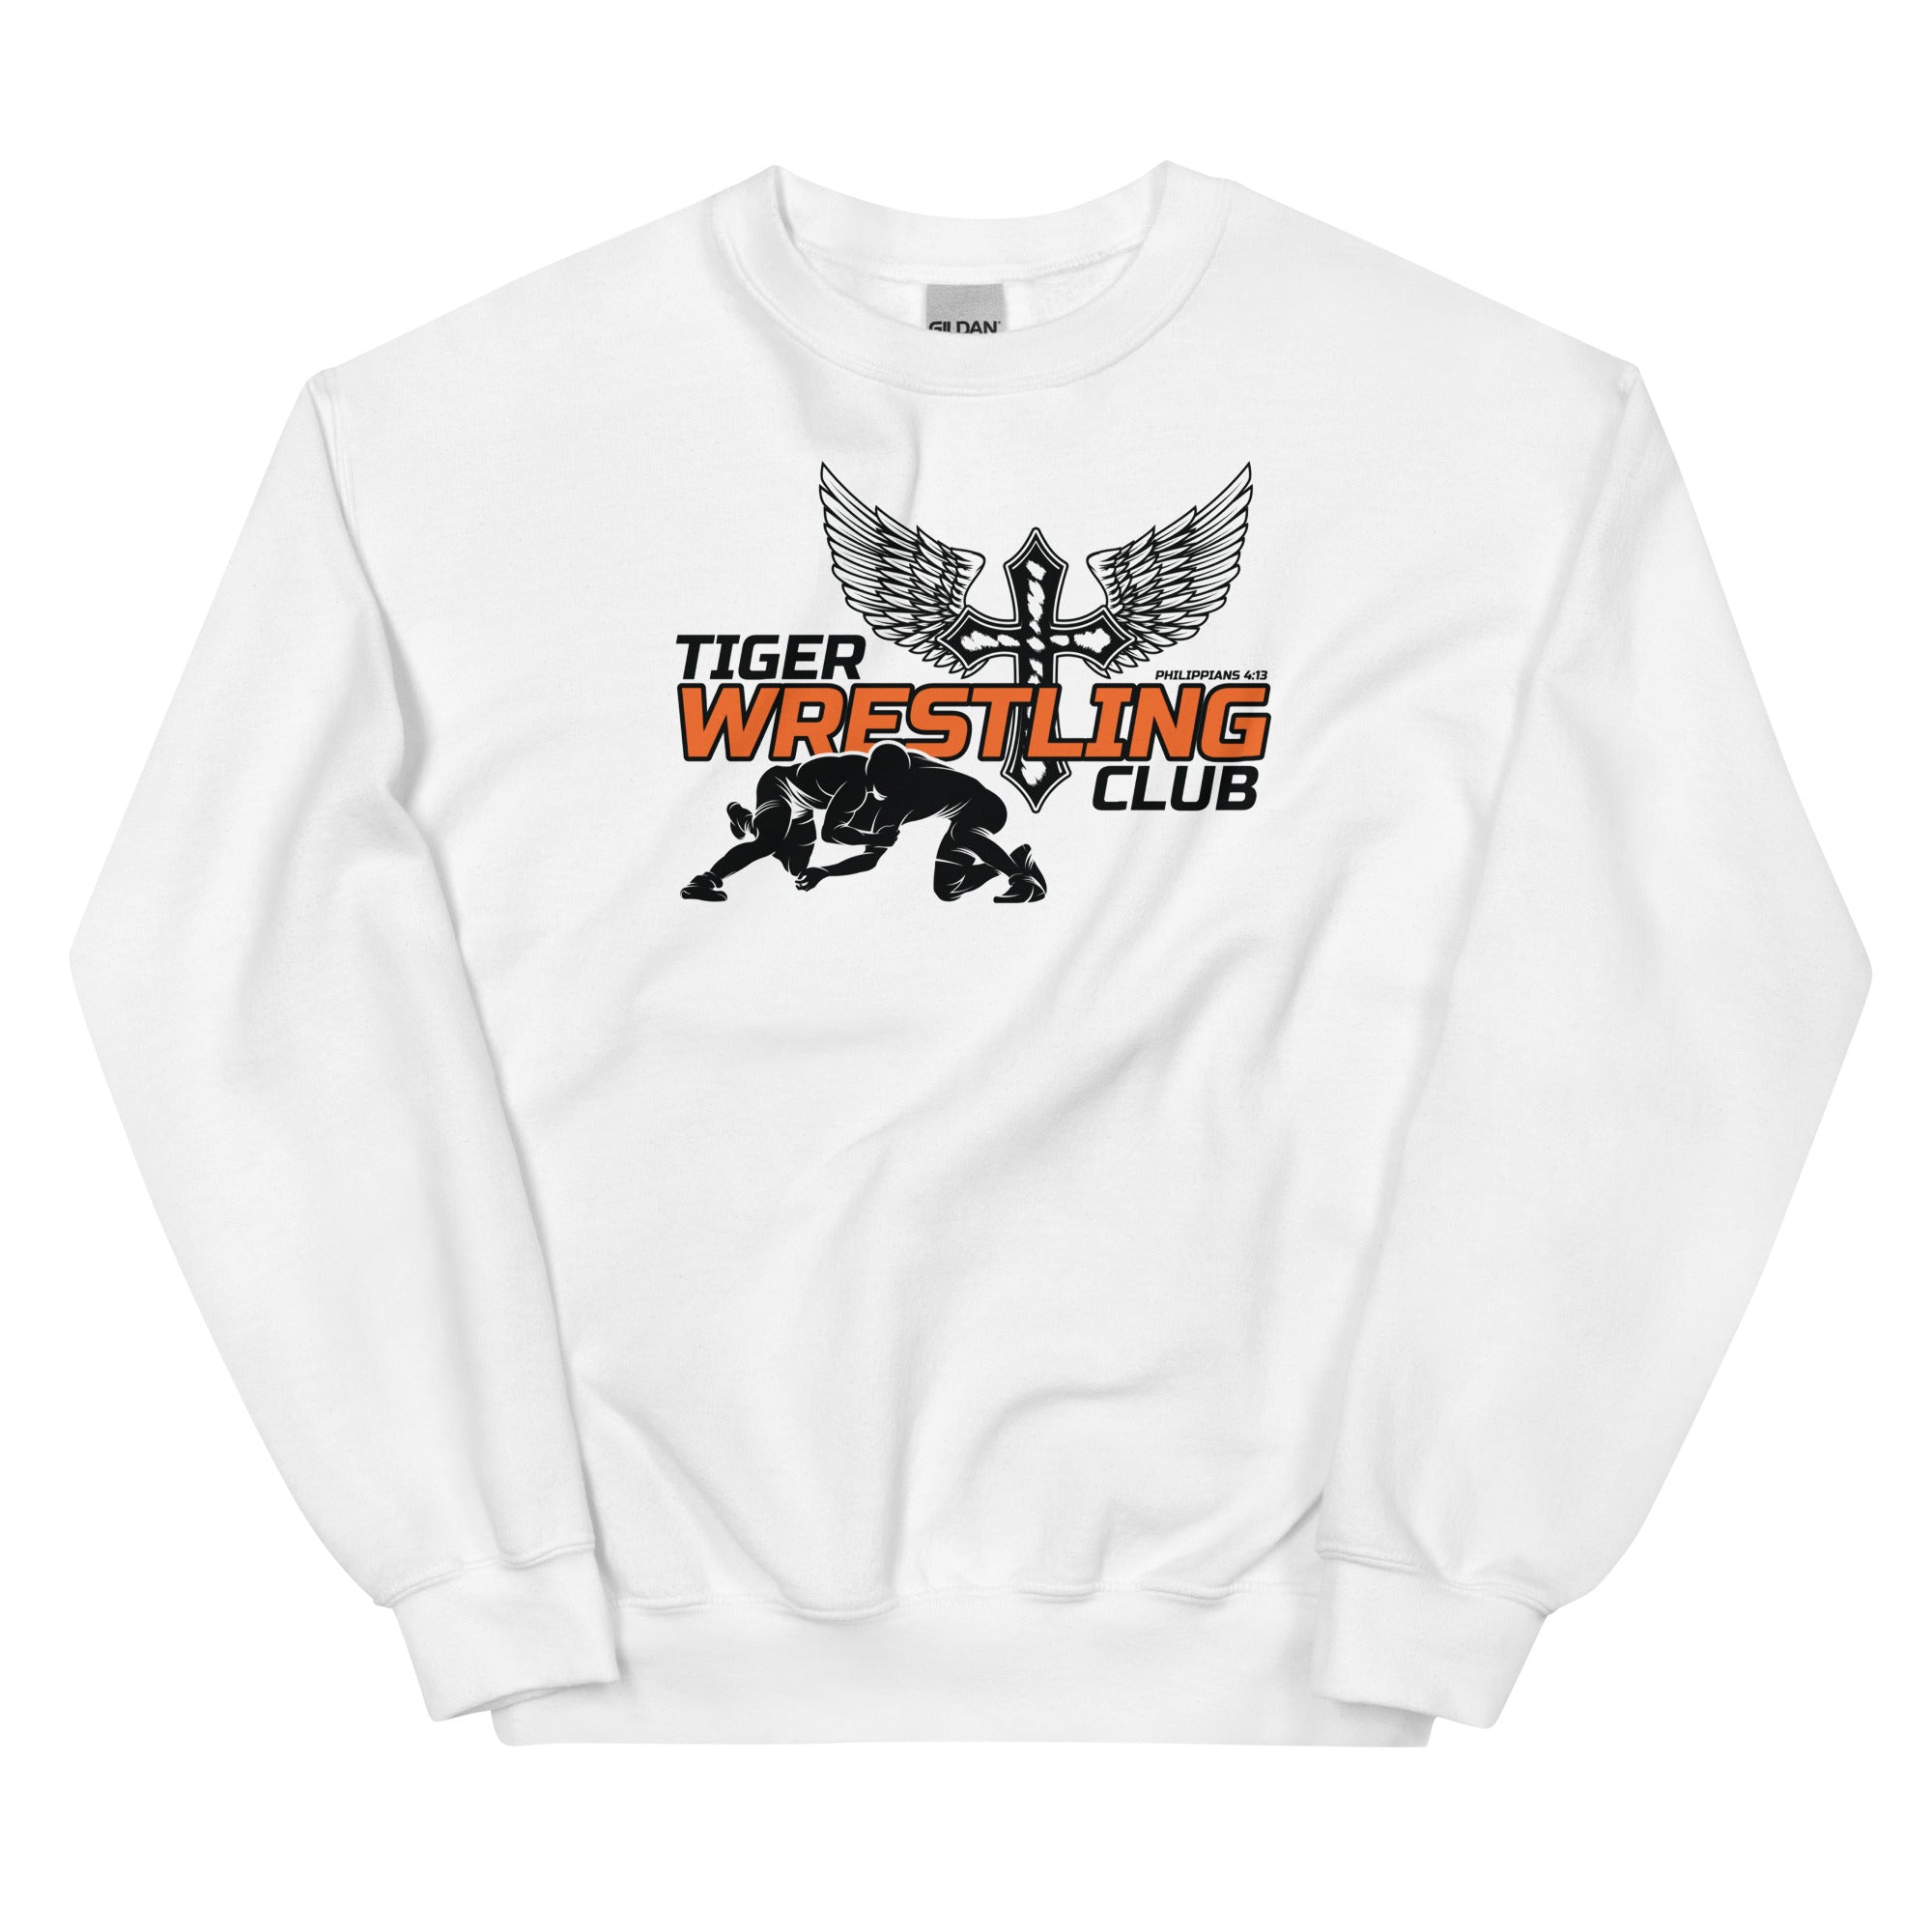 Tiger Wrestling Club Unisex Crew Neck Sweatshirt